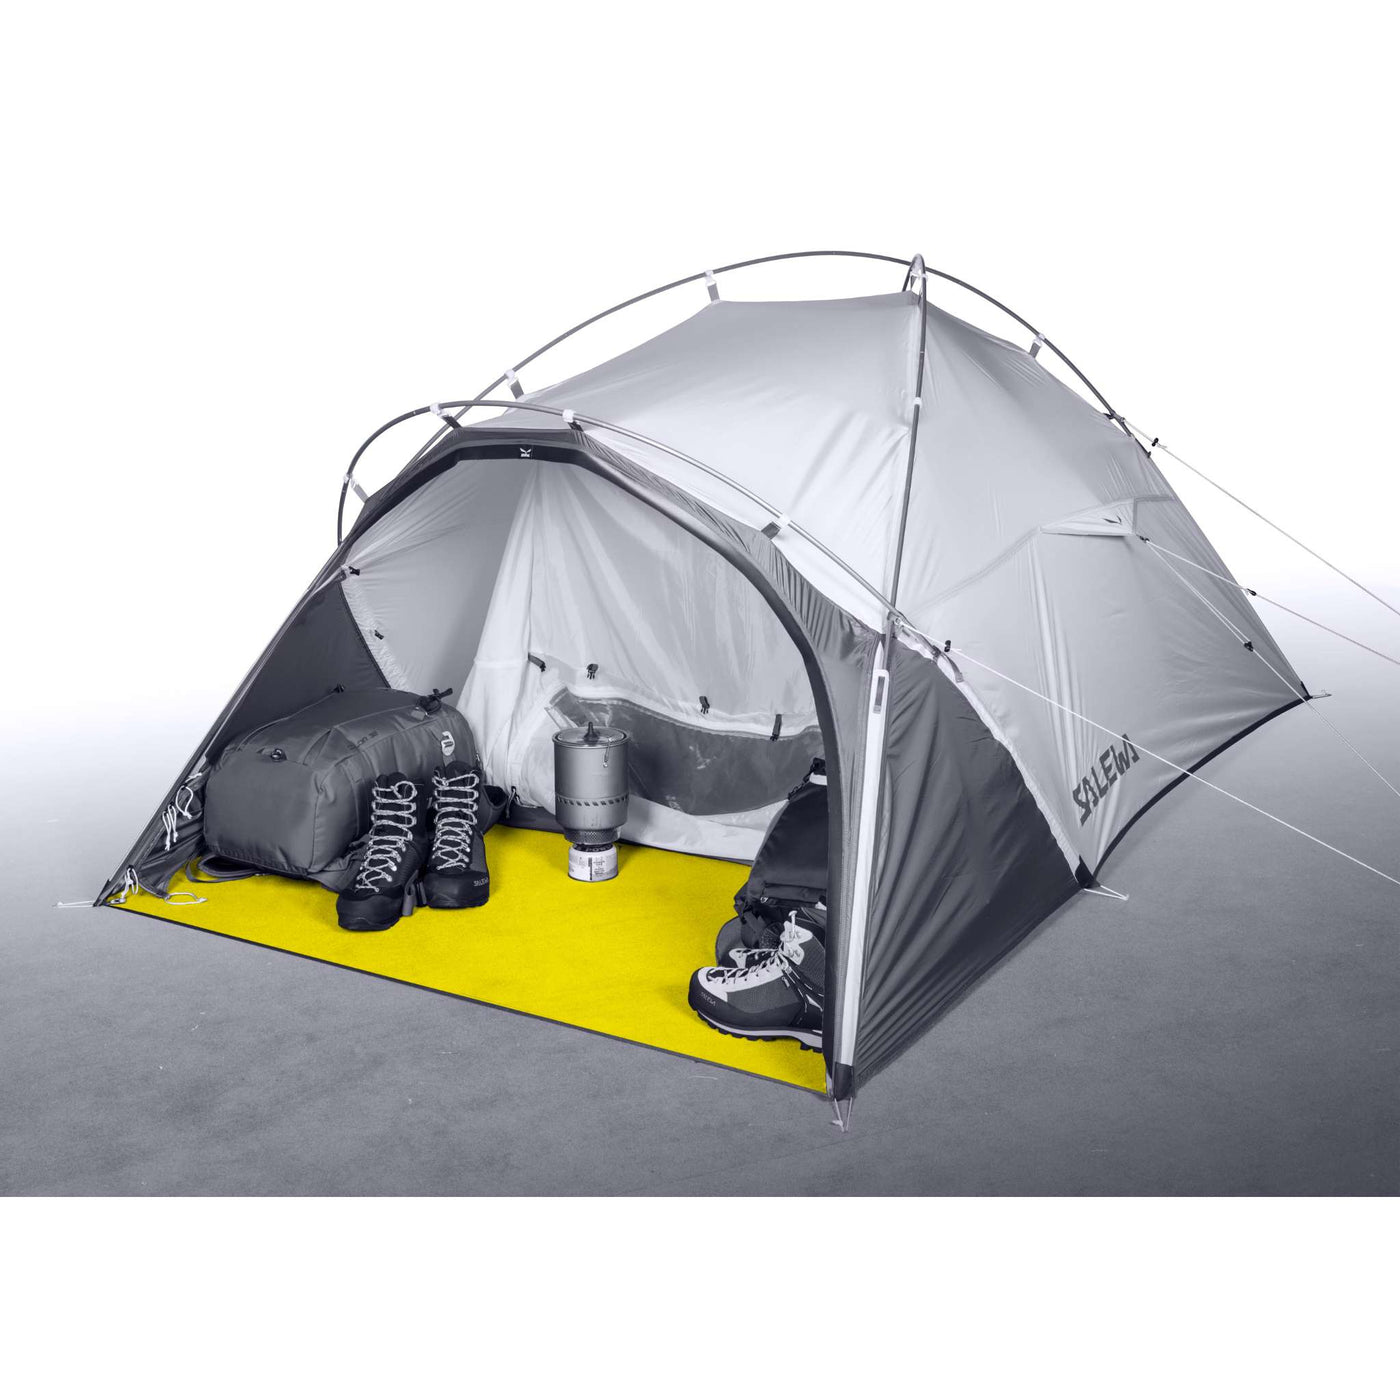 Salewa Litetrek III Tent | 3 Person 2 Season Camping Tent NZ | Further Faster Christchurch NZ #light-grey-cactus